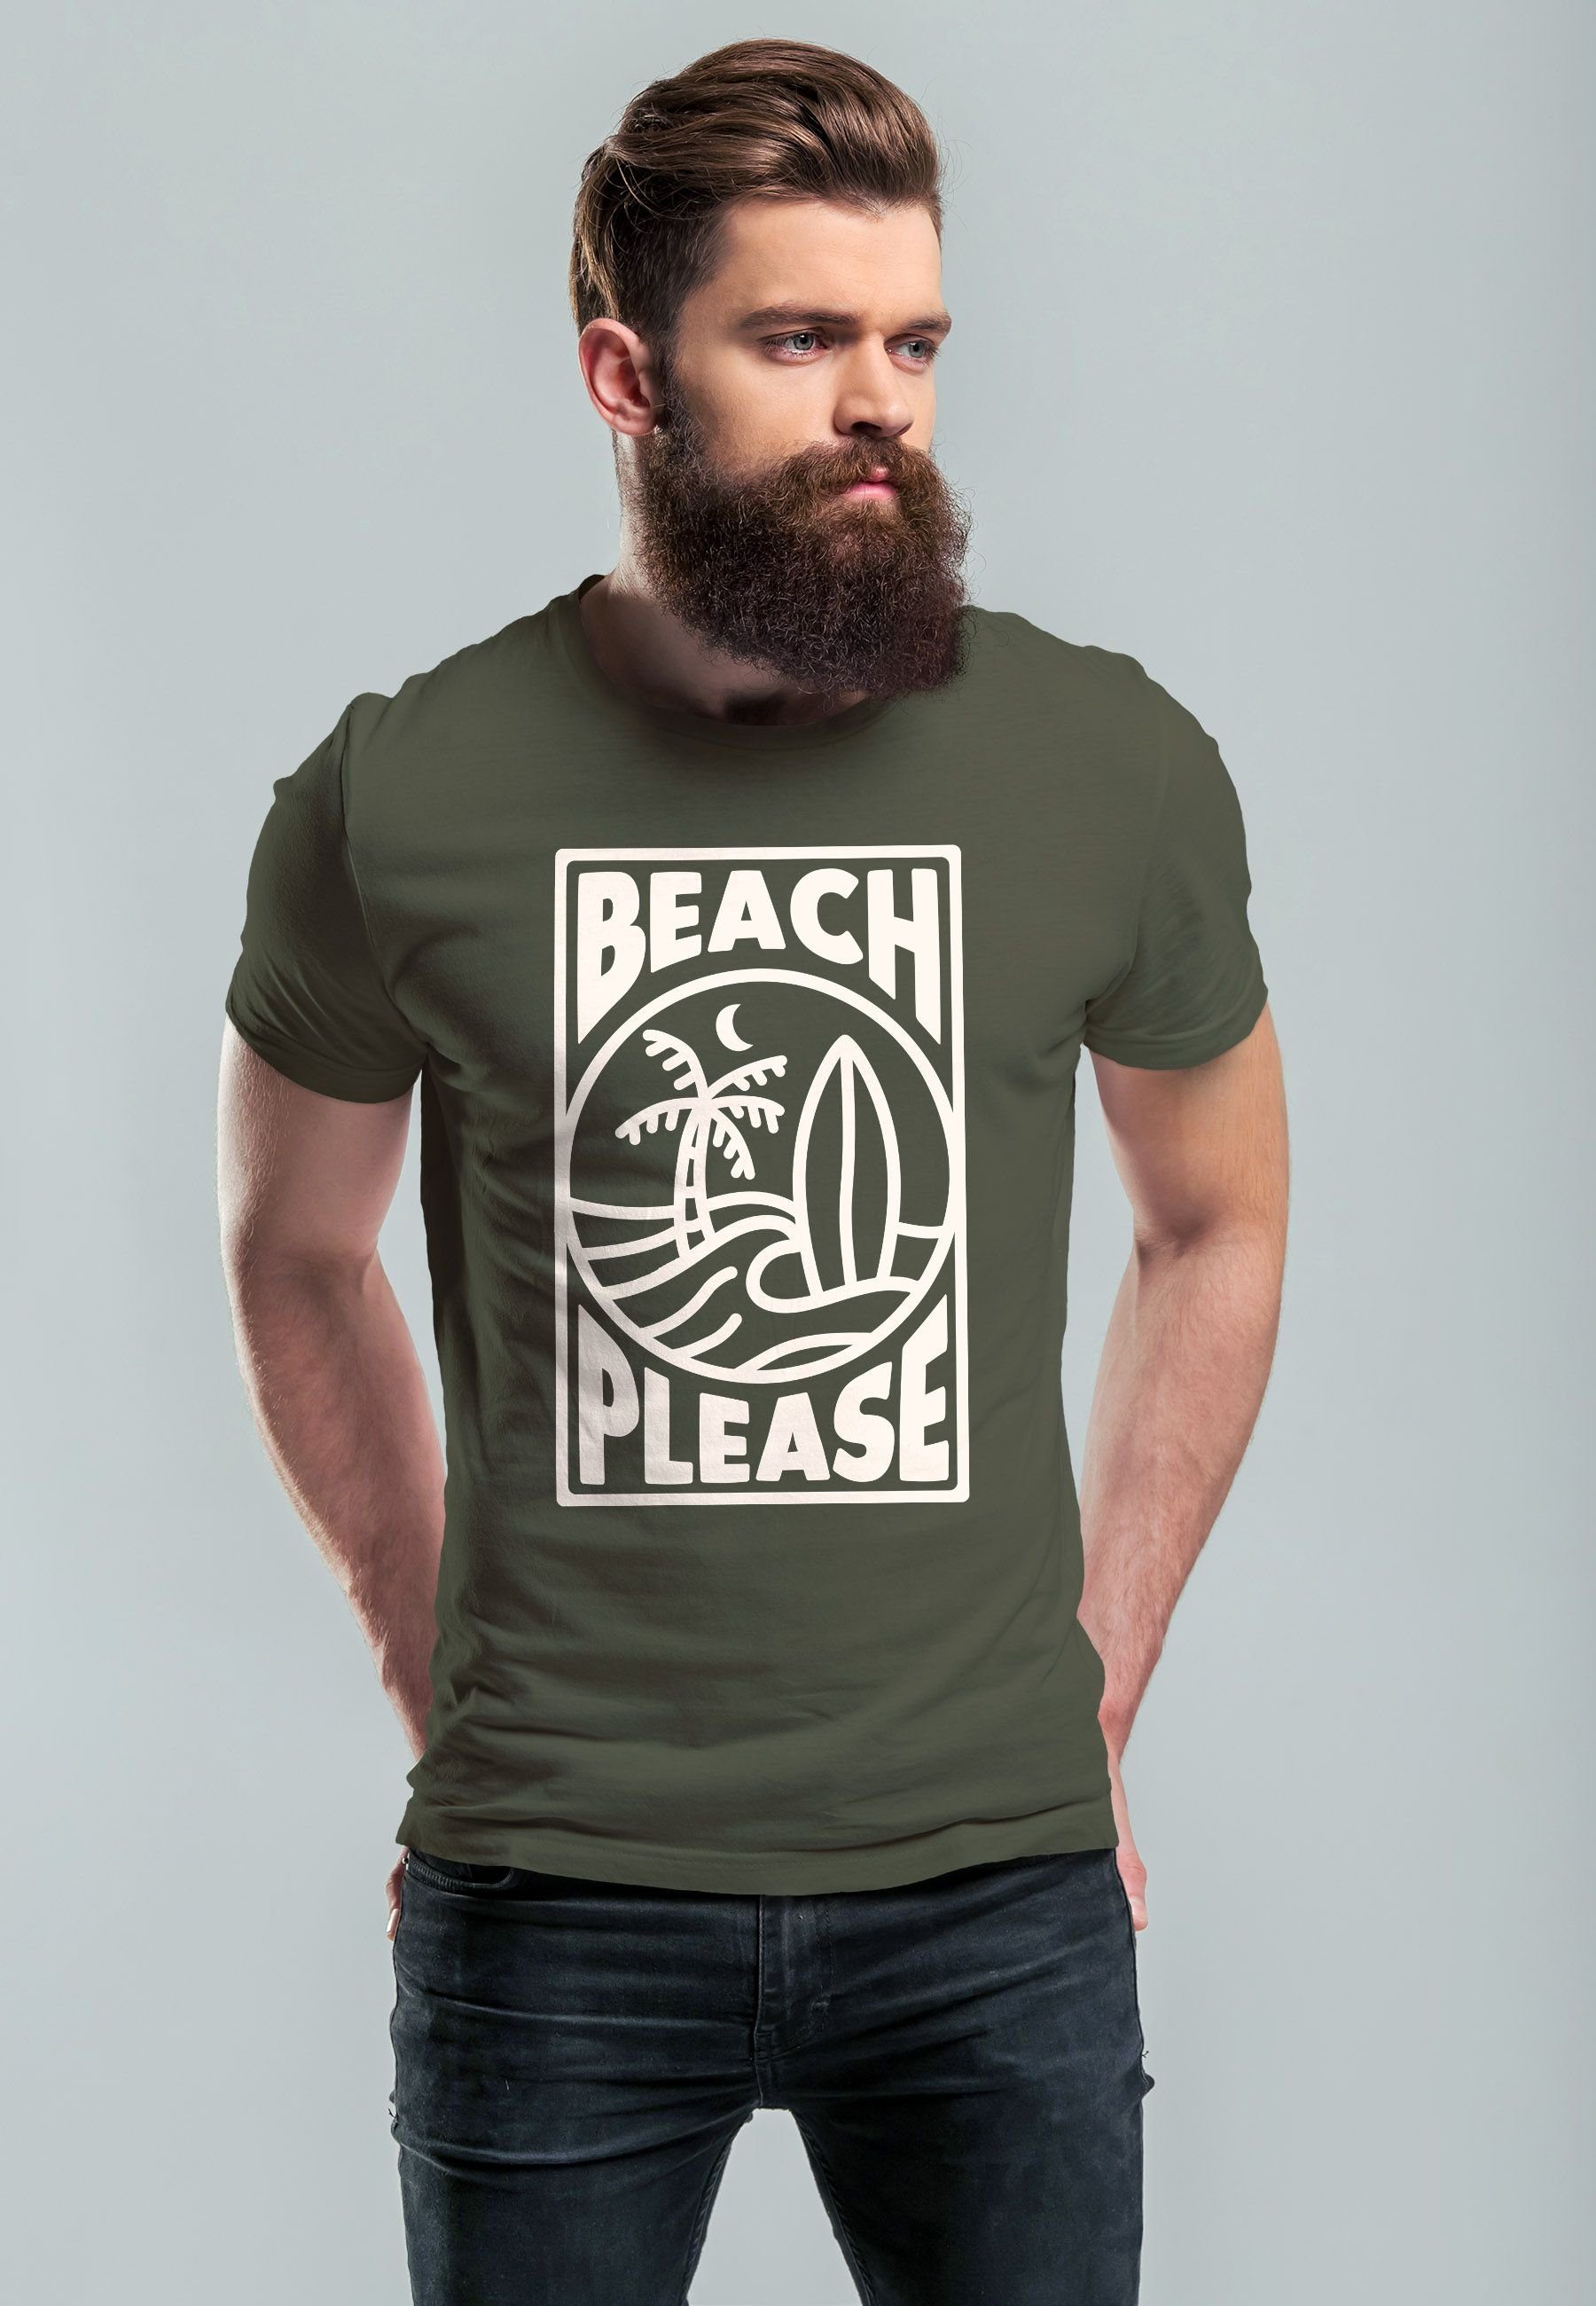 Neverless Print-Shirt Herren T-Shirt Beach Surfboard Print Surfing Print mit Please Wave Sommer Welle army